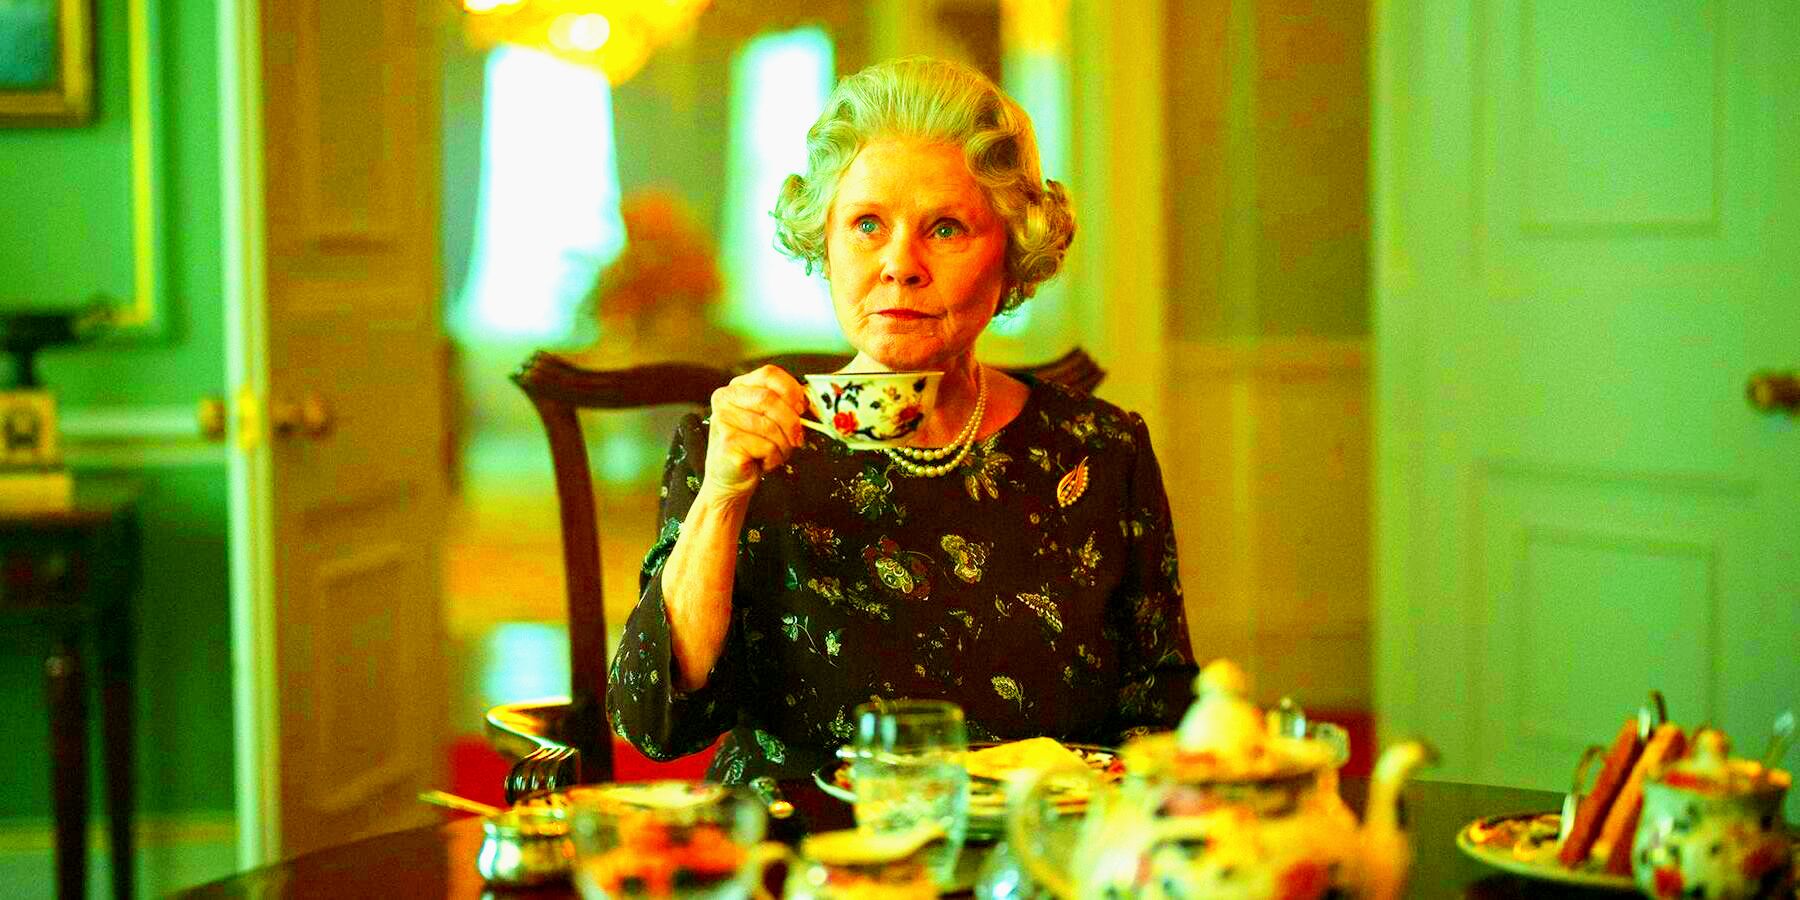 Queen Elizabeth In The Crown Season 6 Drinking Tea At Table Color Edited.jpg